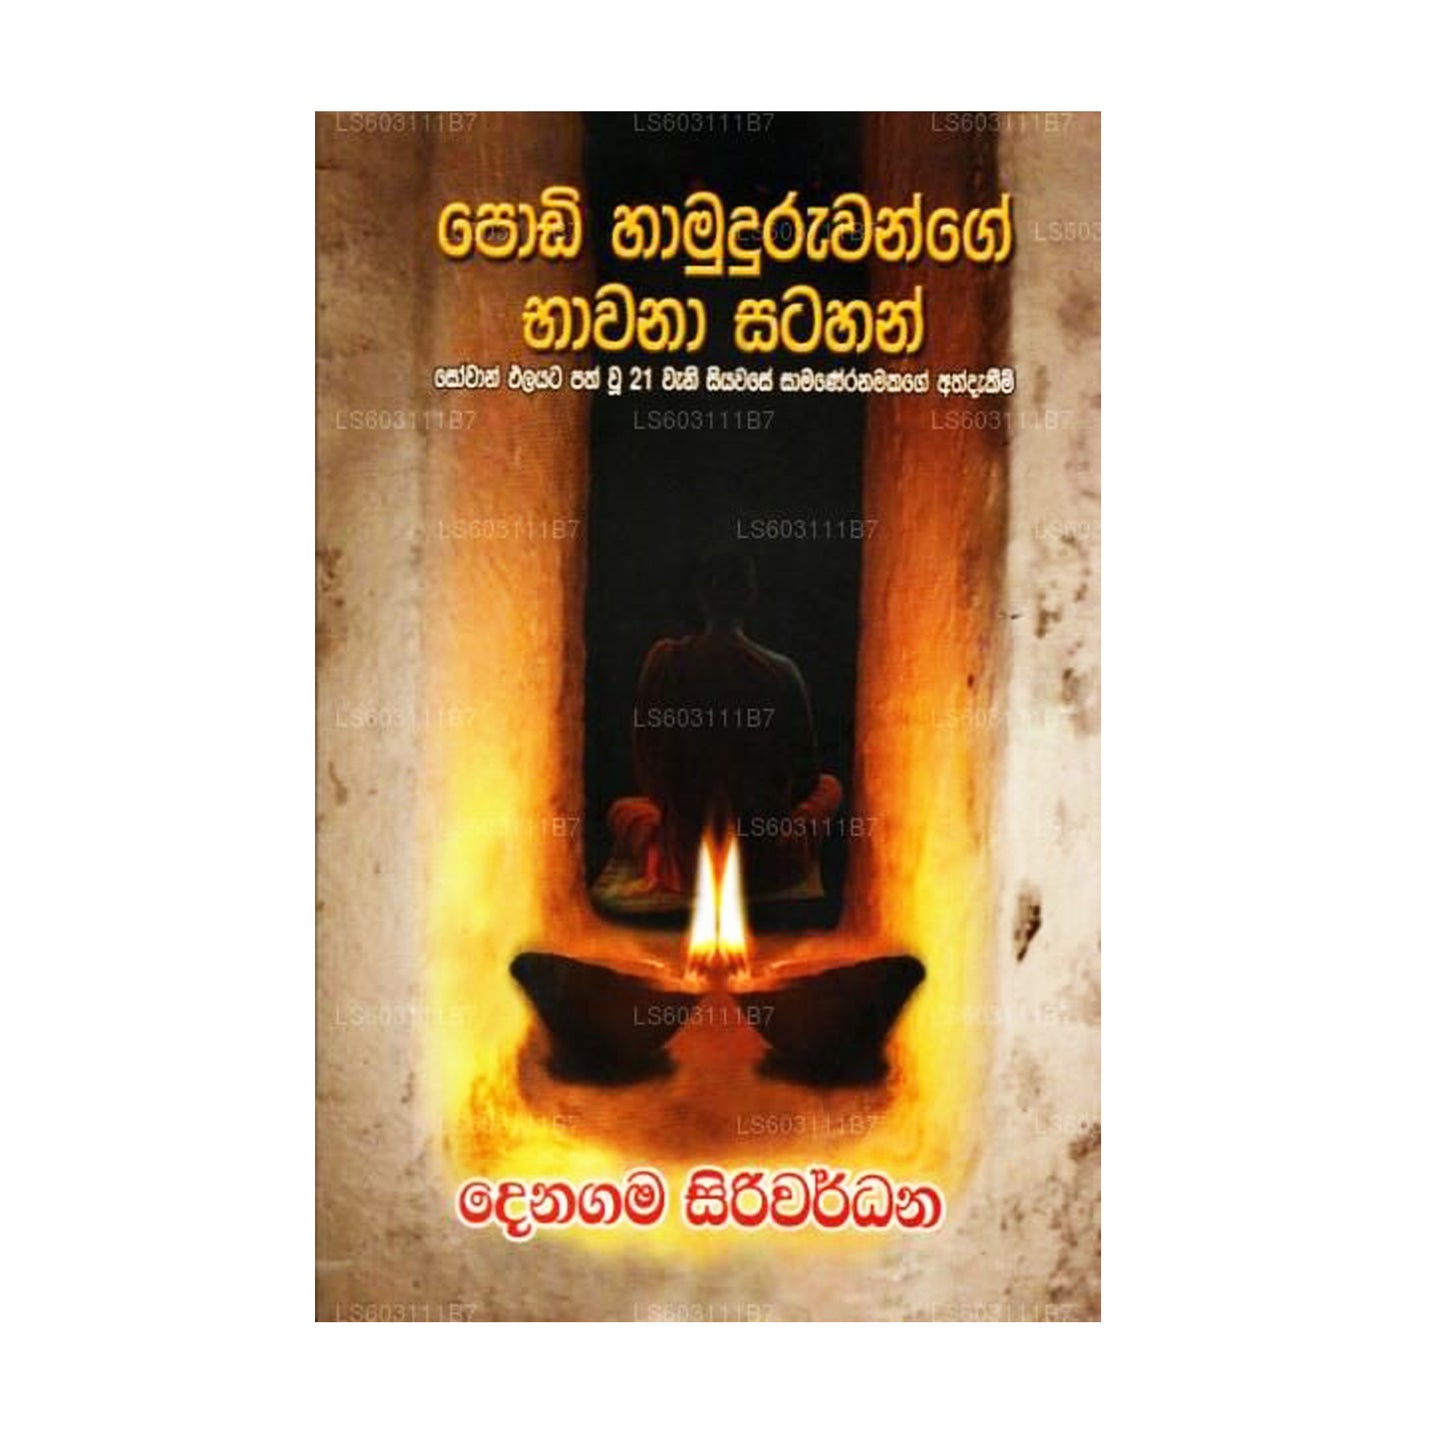 Raamat - Podi Hamuduruwange Bhawana Satahan